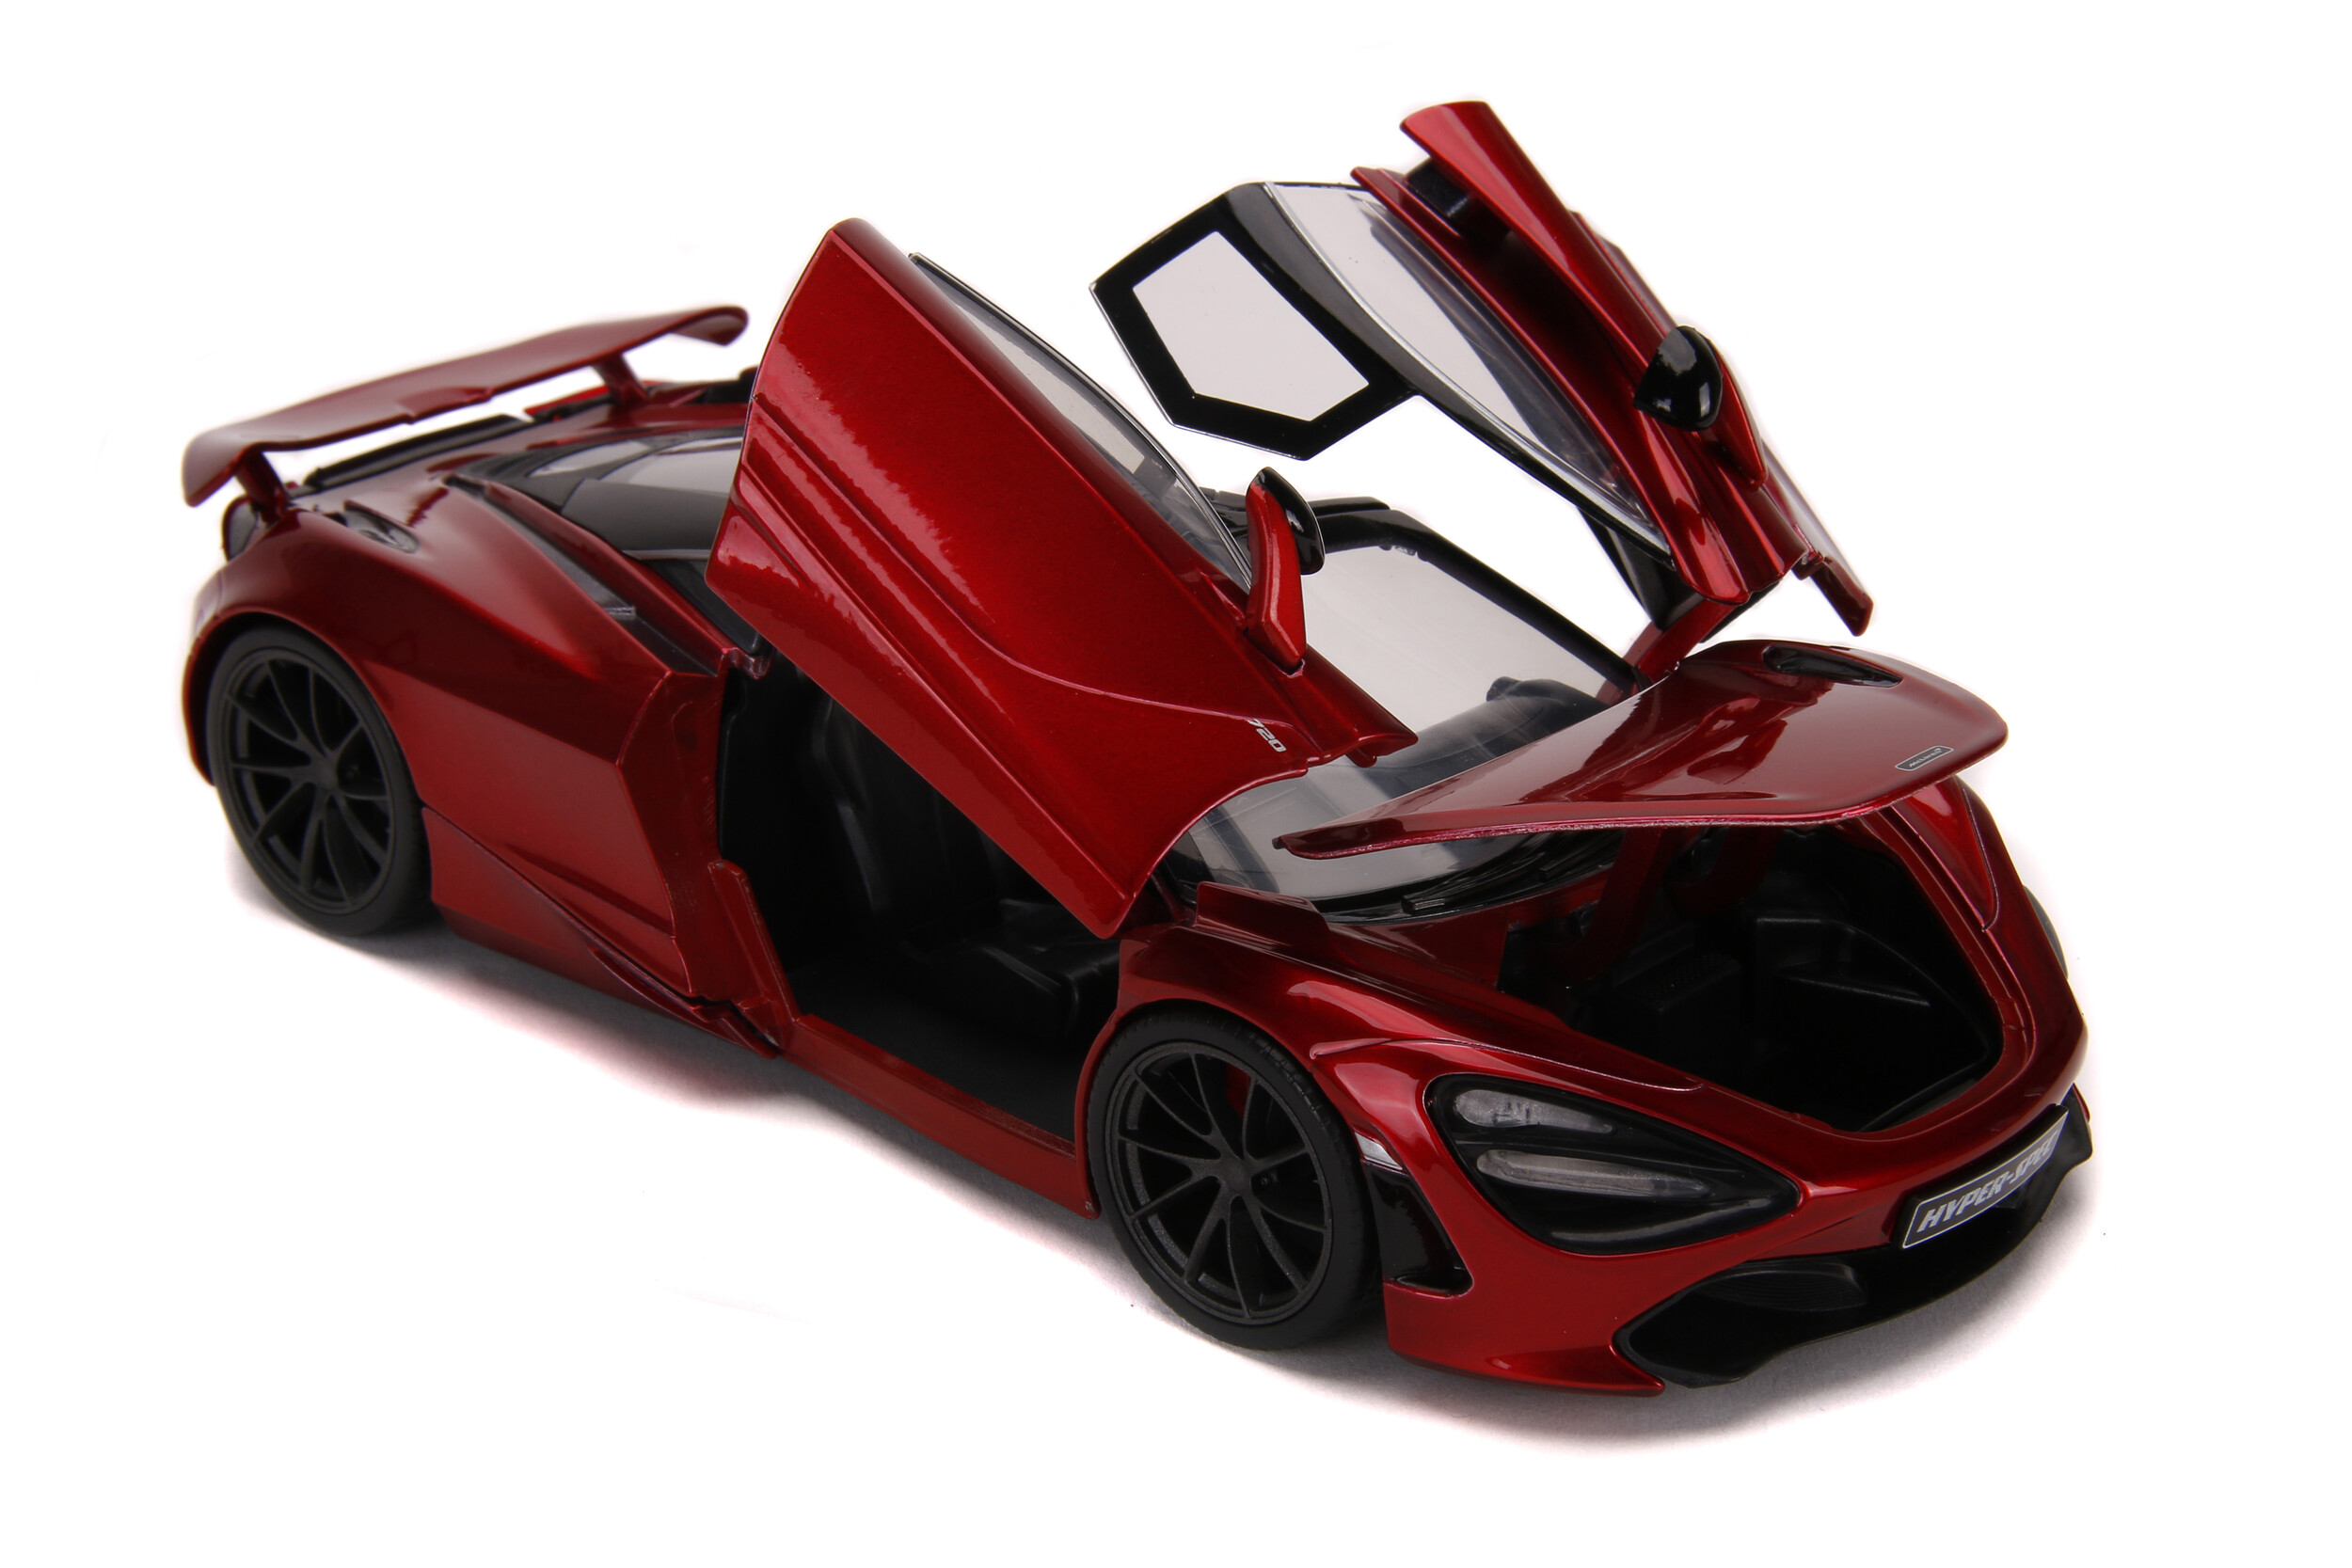 Jada Toys Voiture de sport Fast & Furious McLaren 720S 1:24